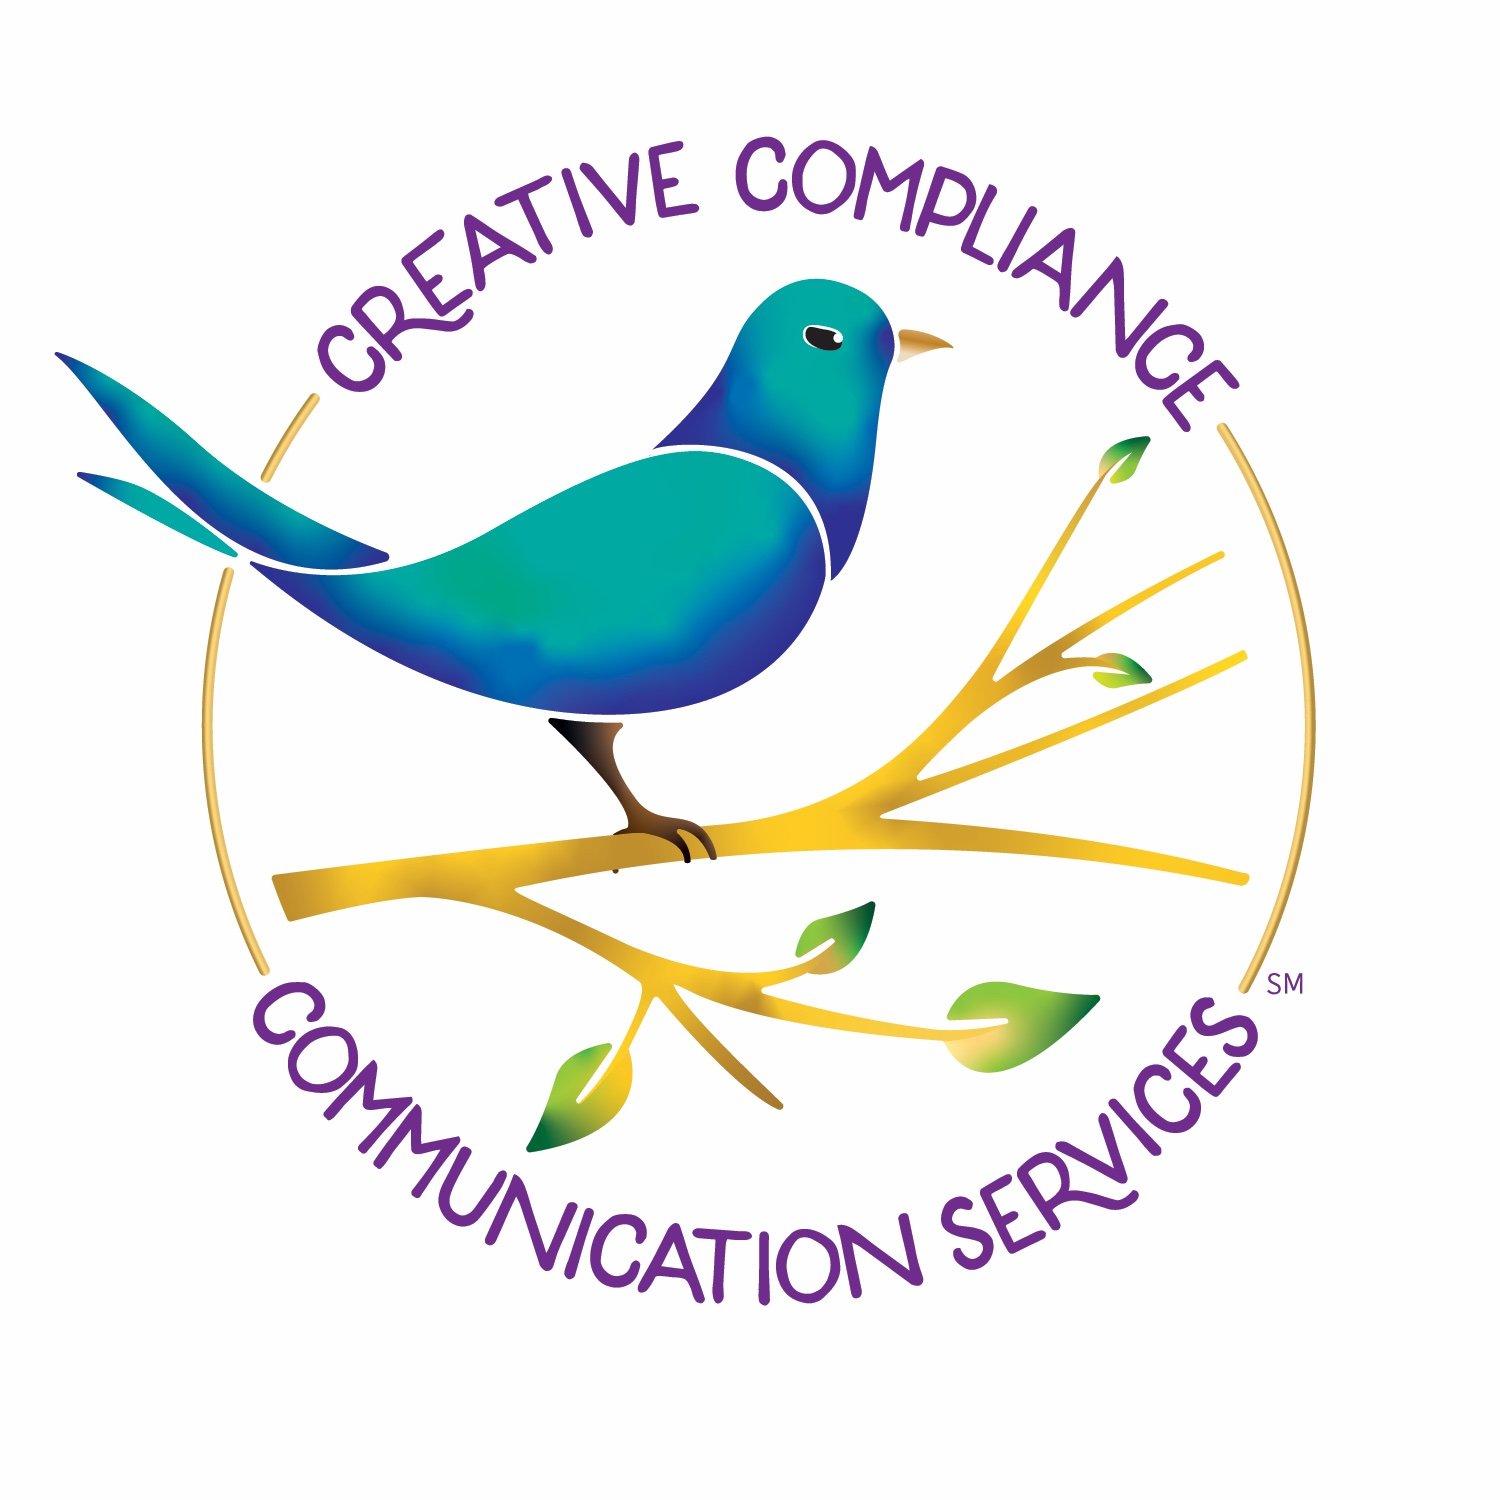 Creative Compliance Communication Services, LLC